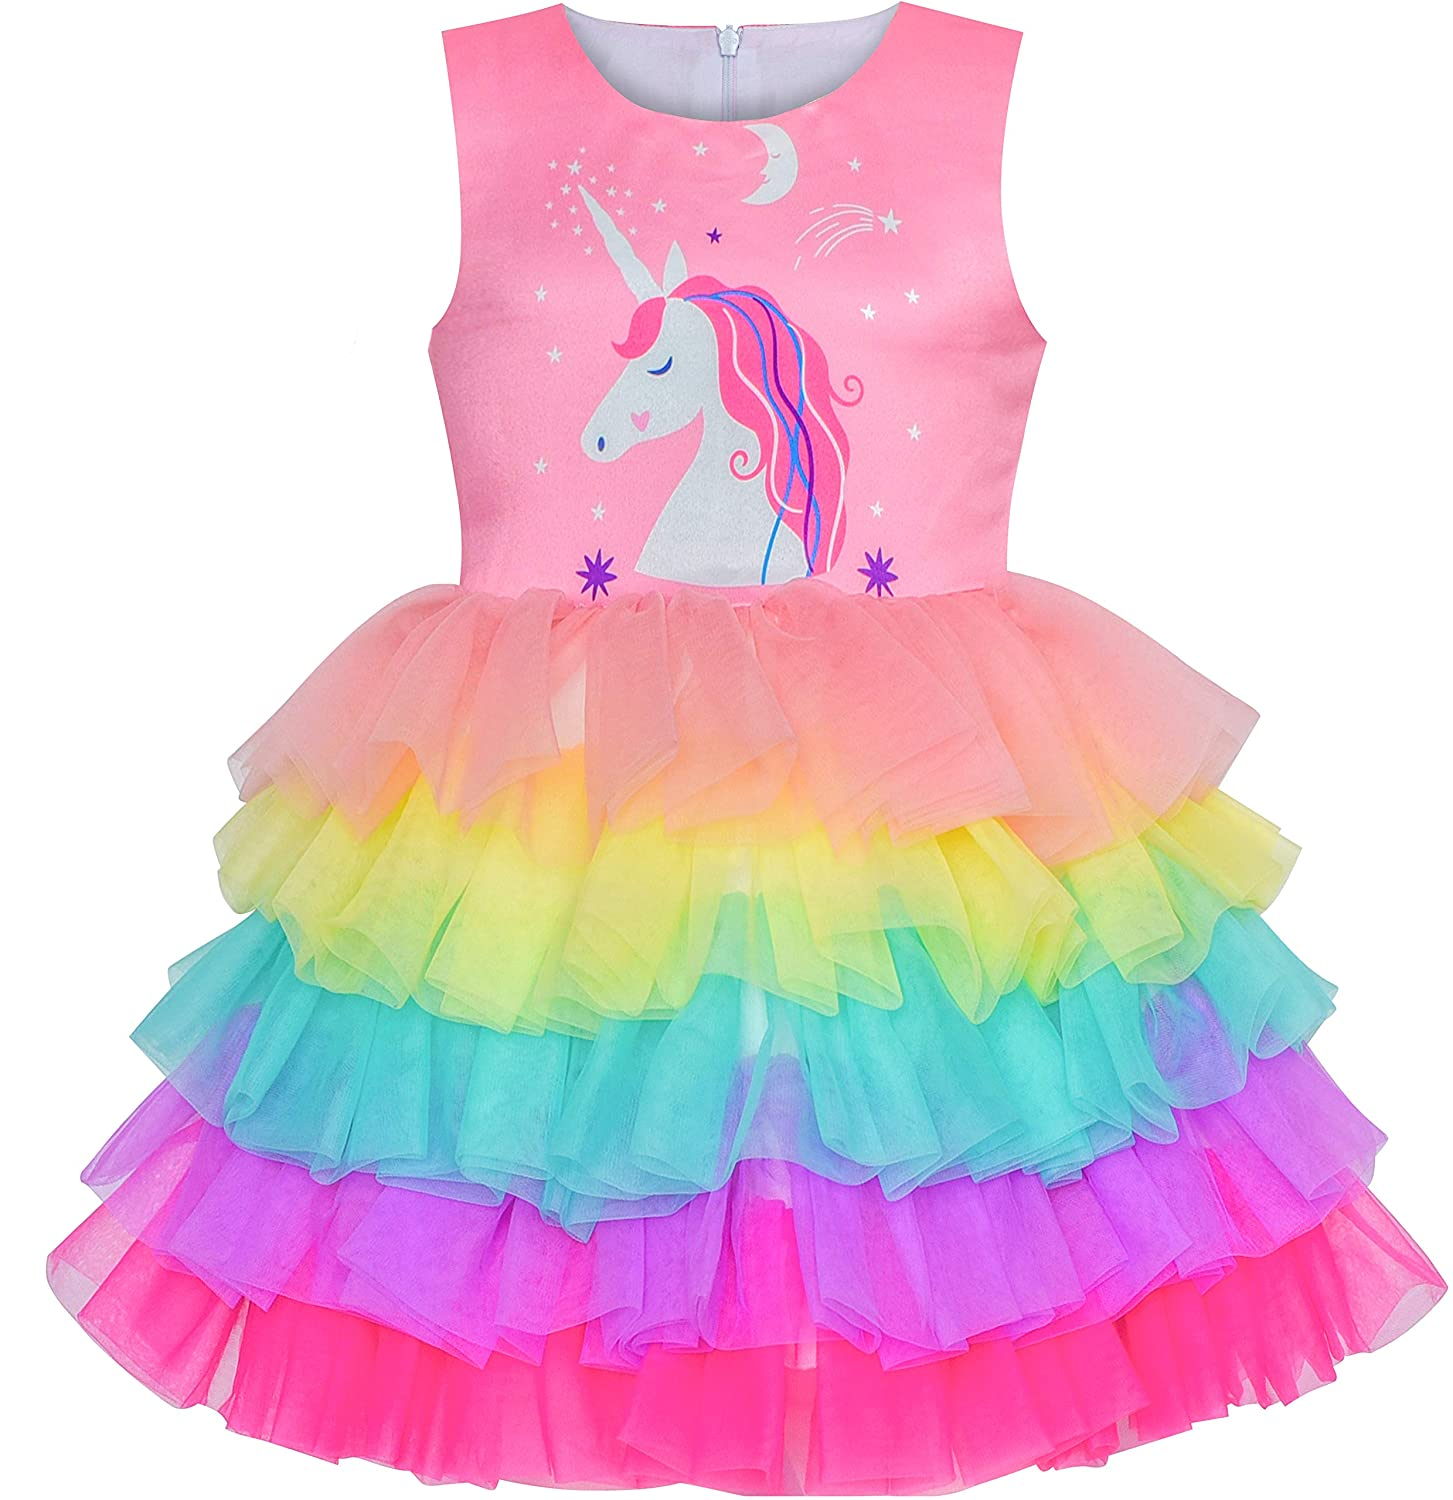 Birthday Princess Ruffle Dress with Balloon Print